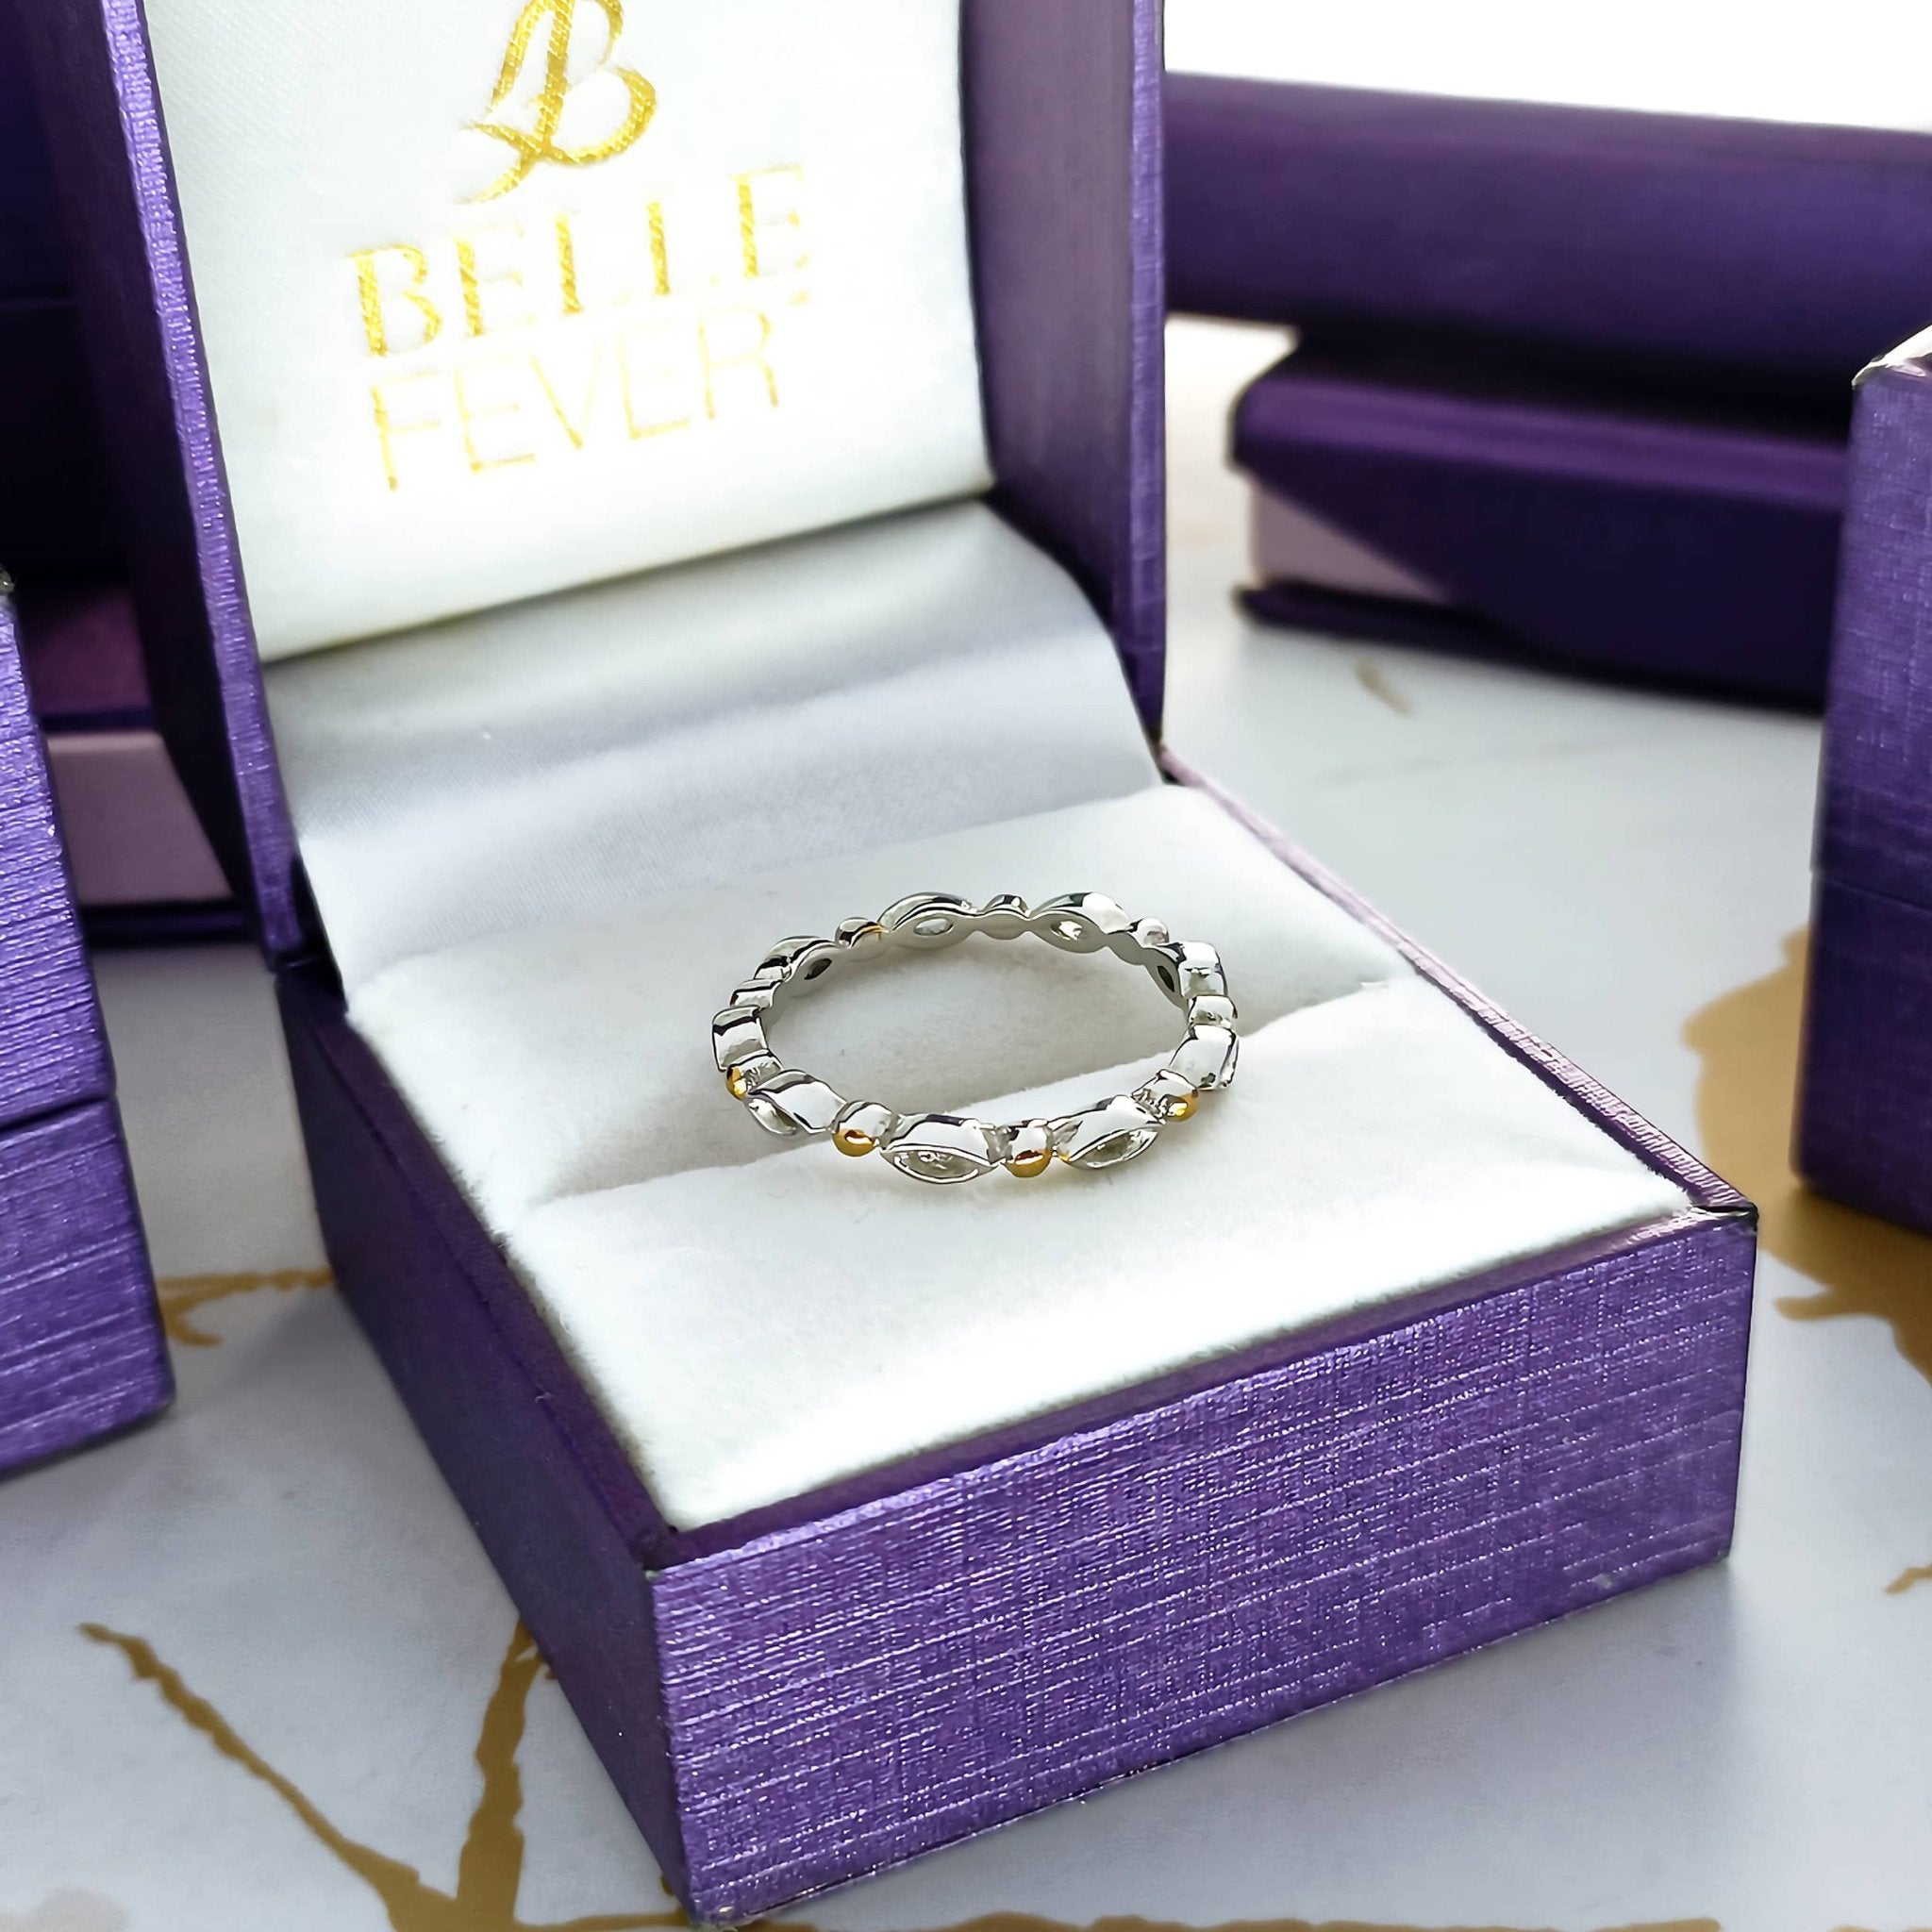 Blushing Ring - Rings by Belle Fever